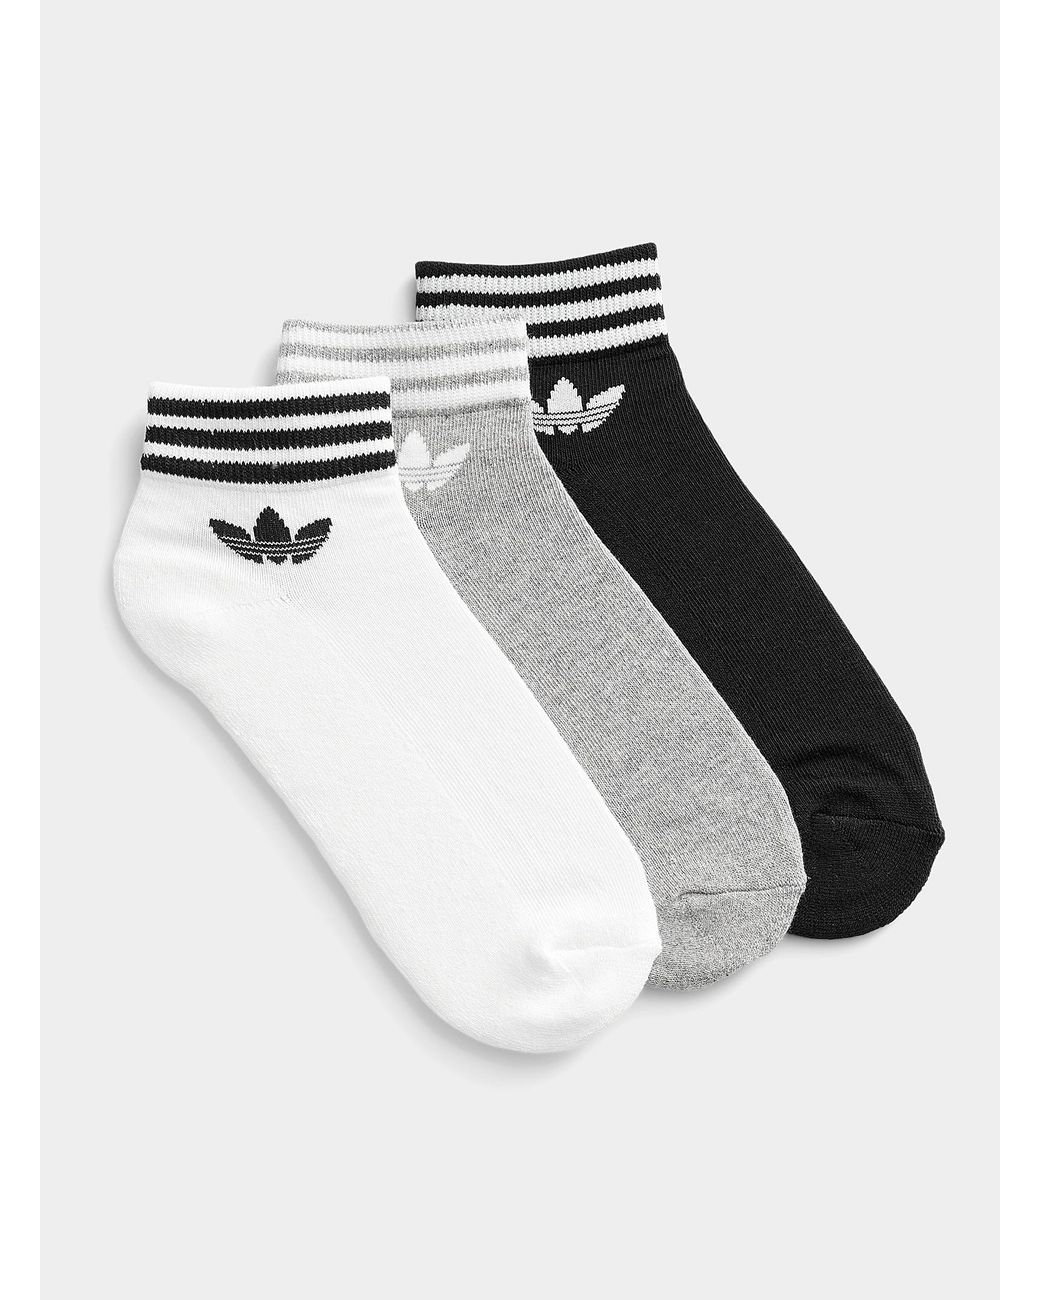 adidas Originals Cotton Trefoil Athletic Ped Socks Set Of 3 in White | Lyst